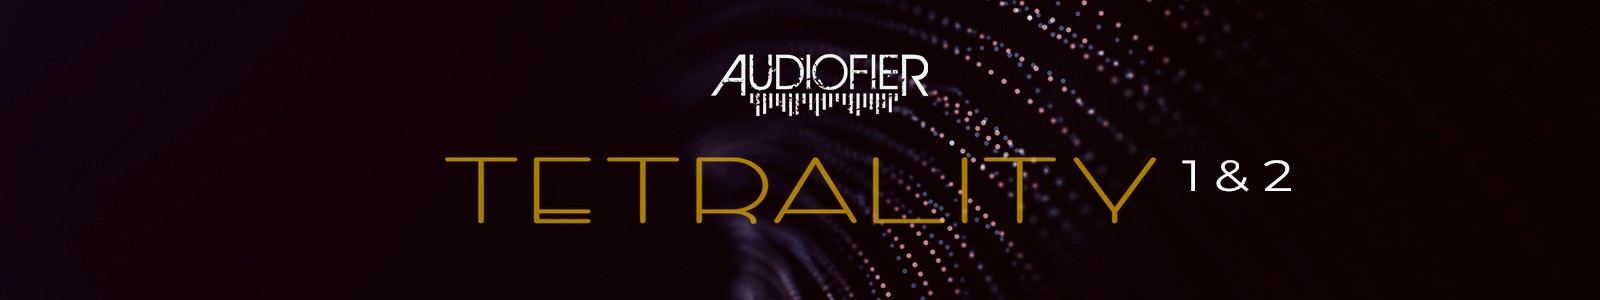 Audiofier TETRALITY 1 & 2 Bundle